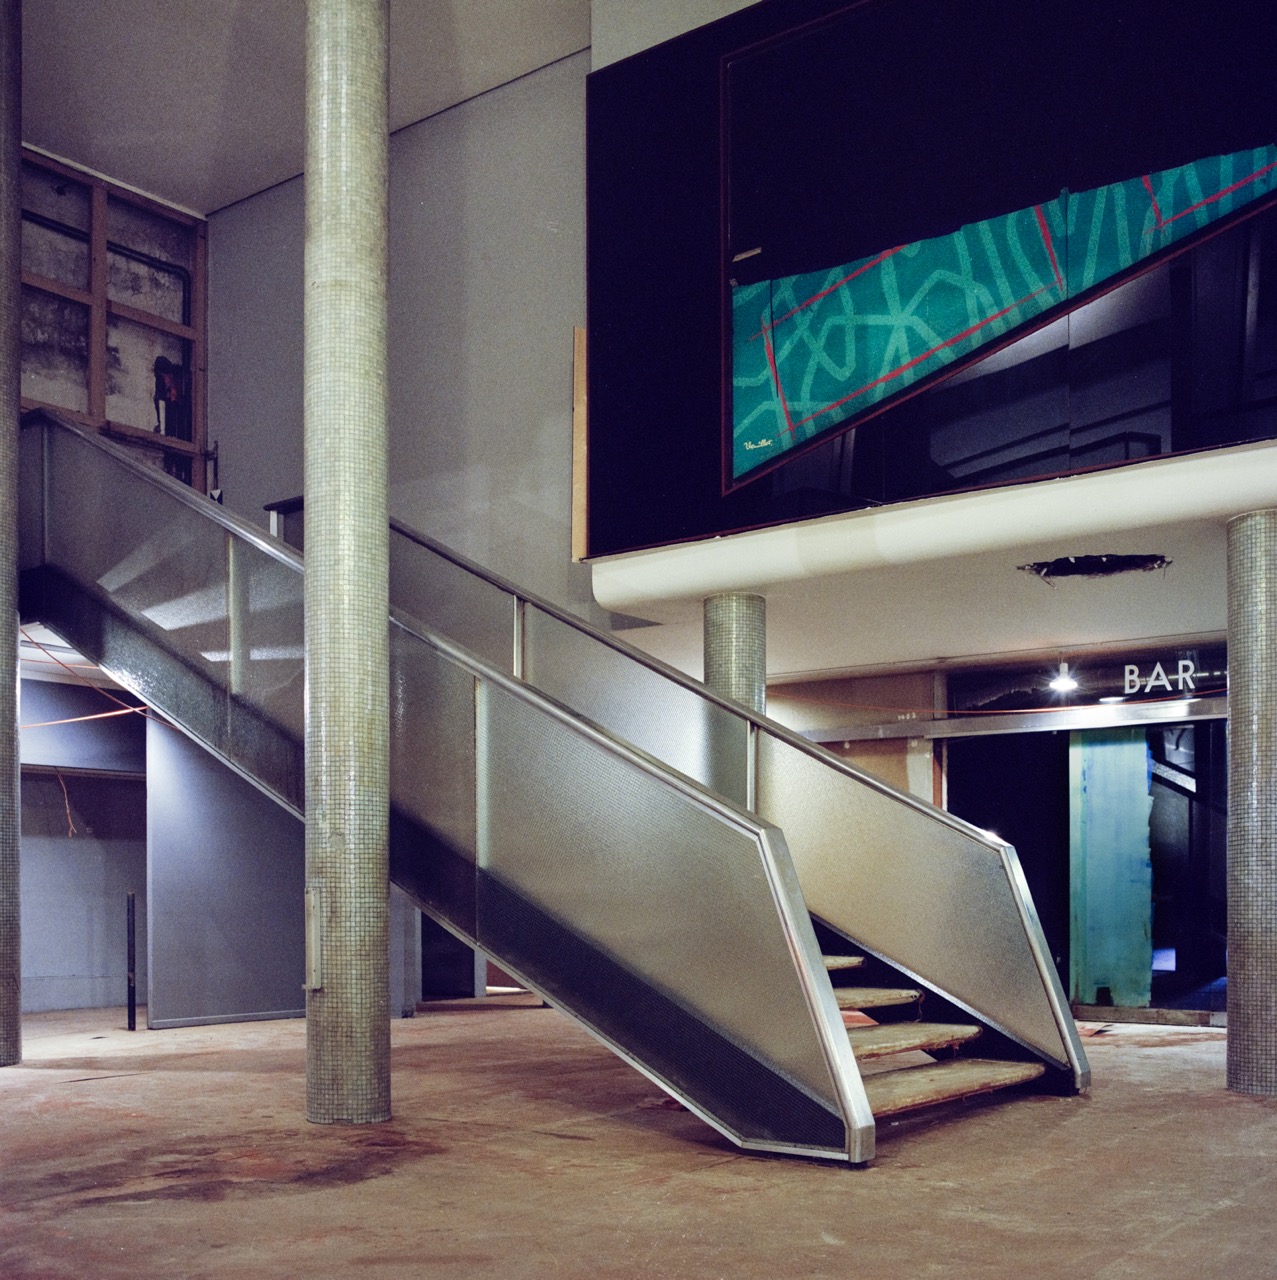 Lobby, escalier, colonne, photo Laetitia Gaessler, 2021